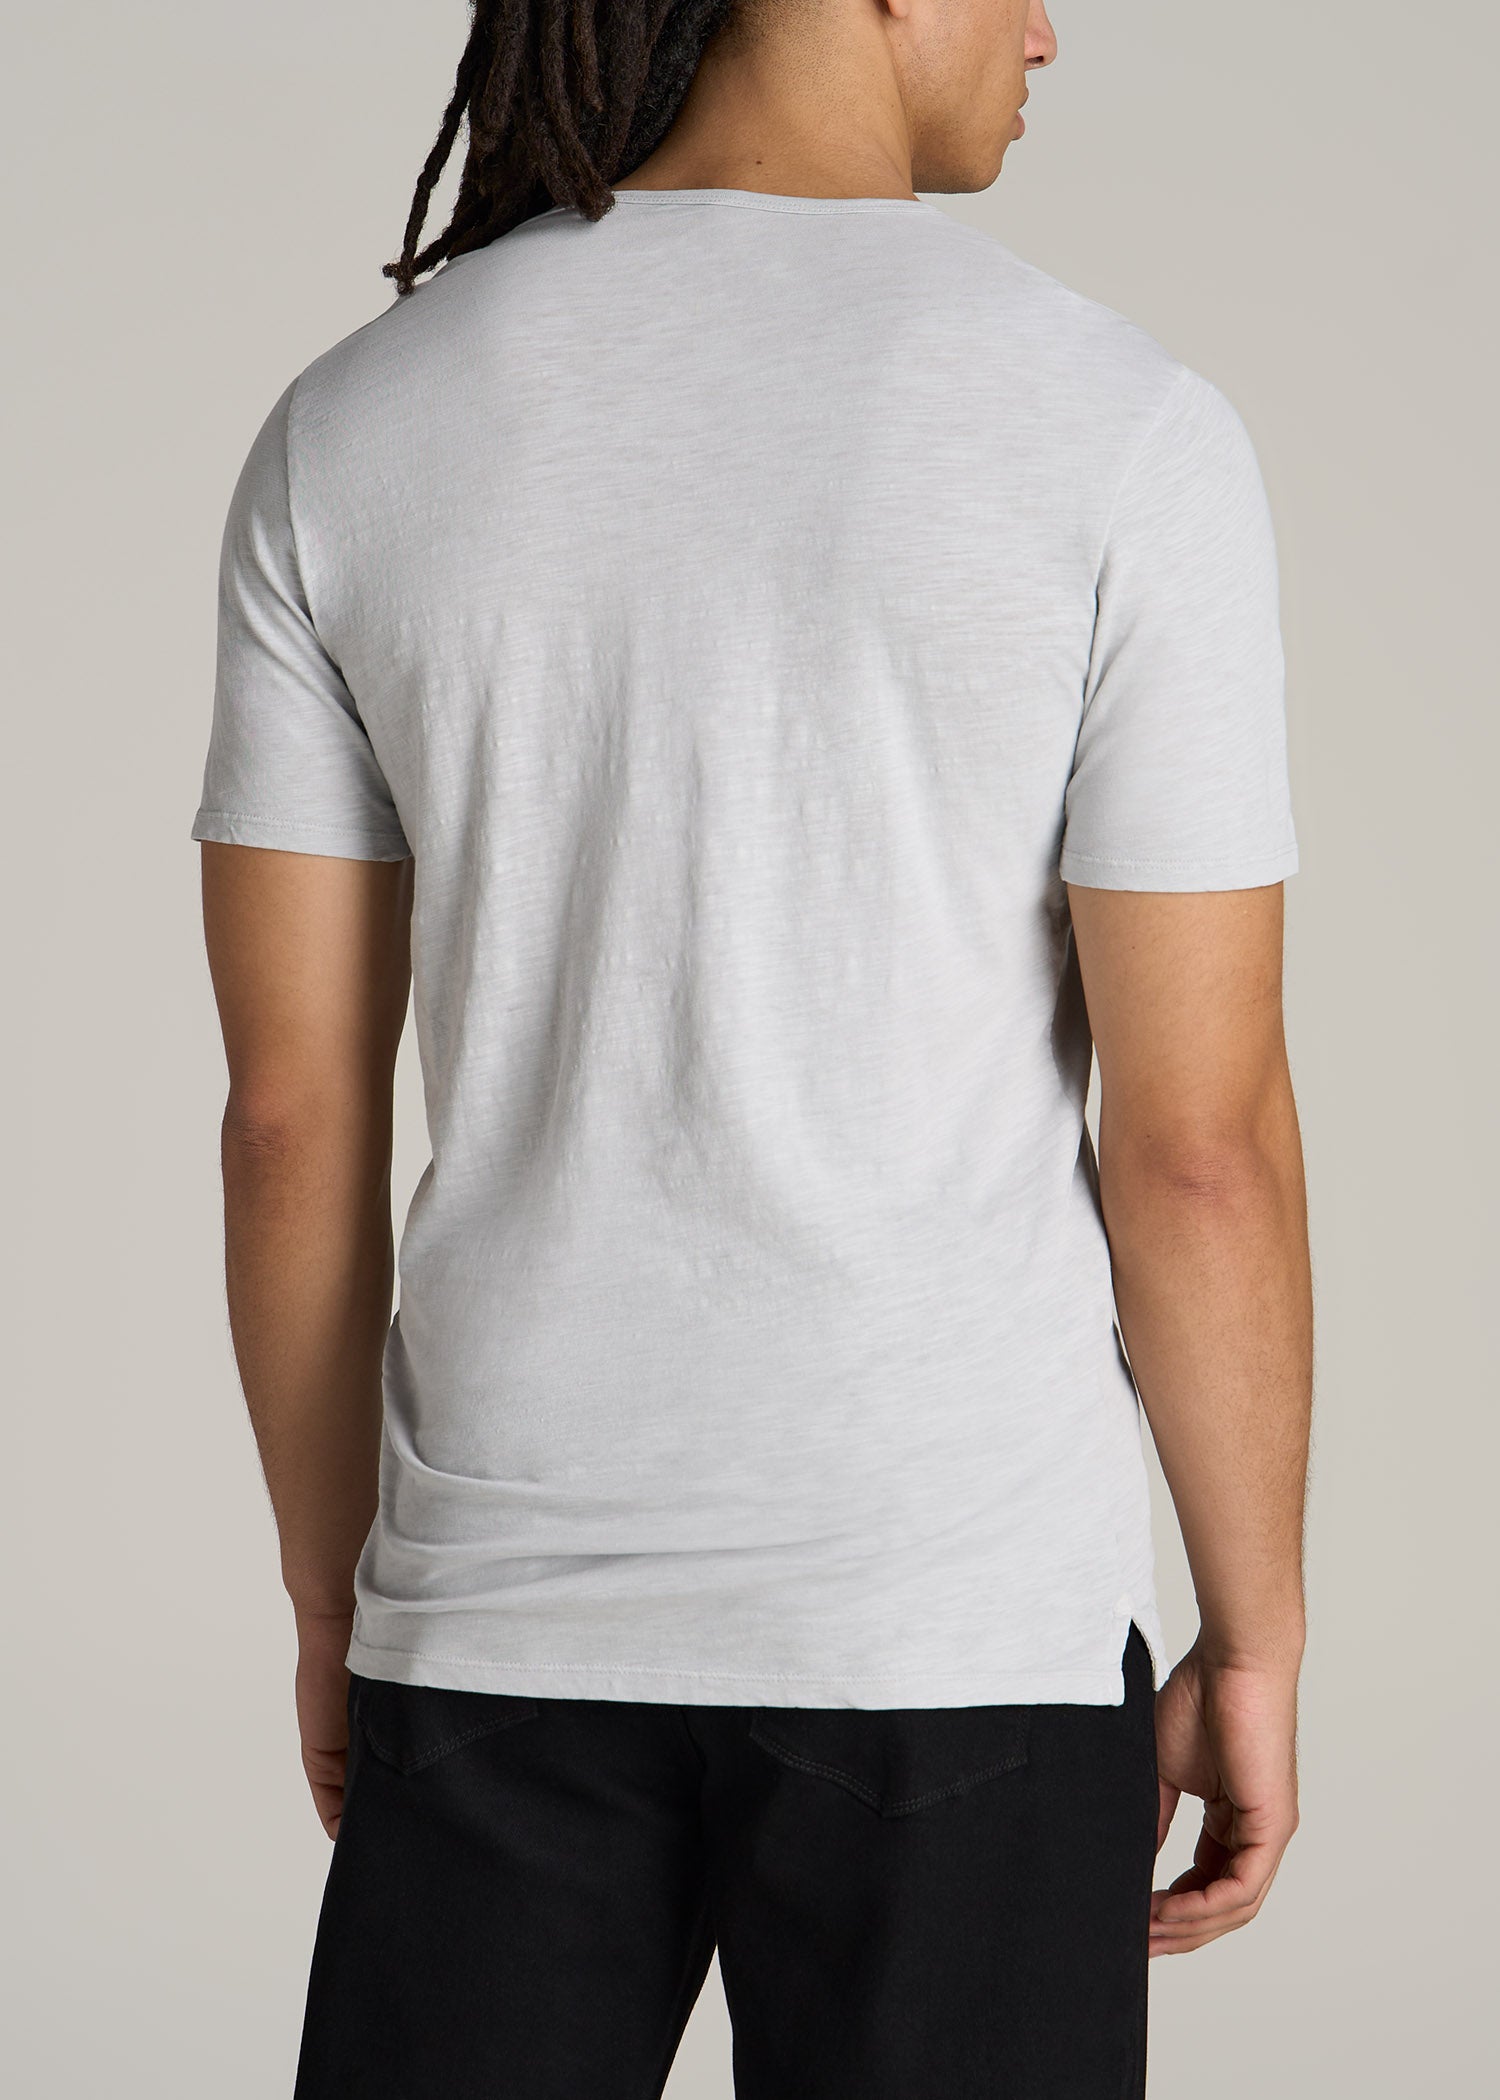 Slub Tee in Vapor Grey - Tall Men's Shirts – American Tall